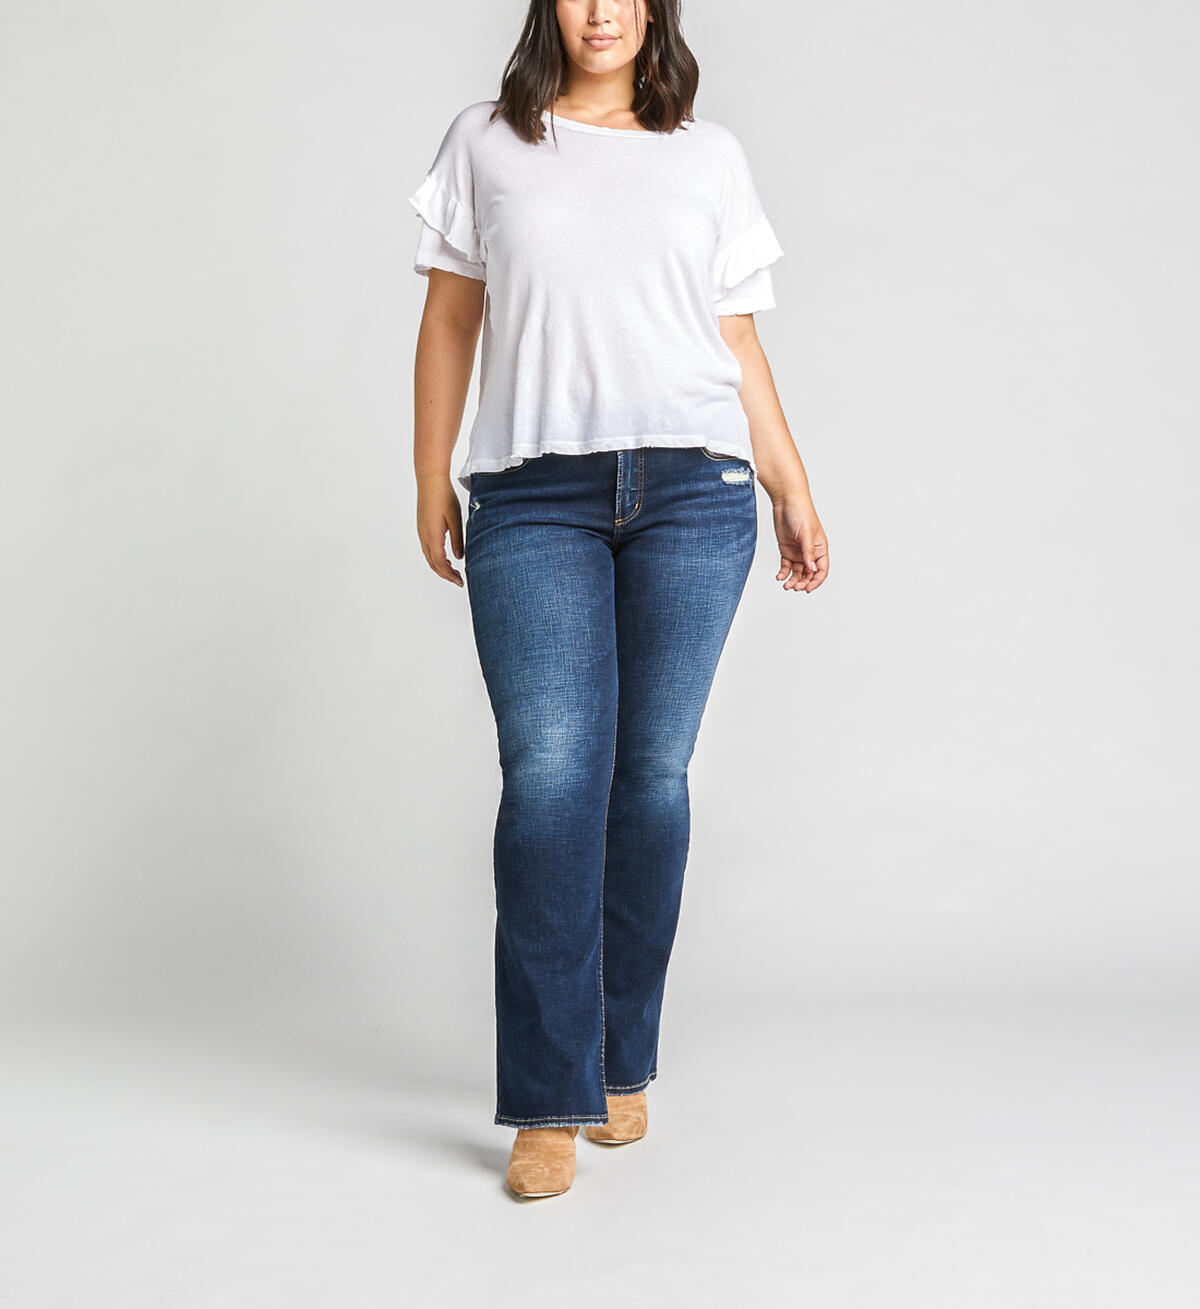 Elyse Mid Rise Slim Bootcut Jeans Plus Size, Indigo, hi-res image number 3